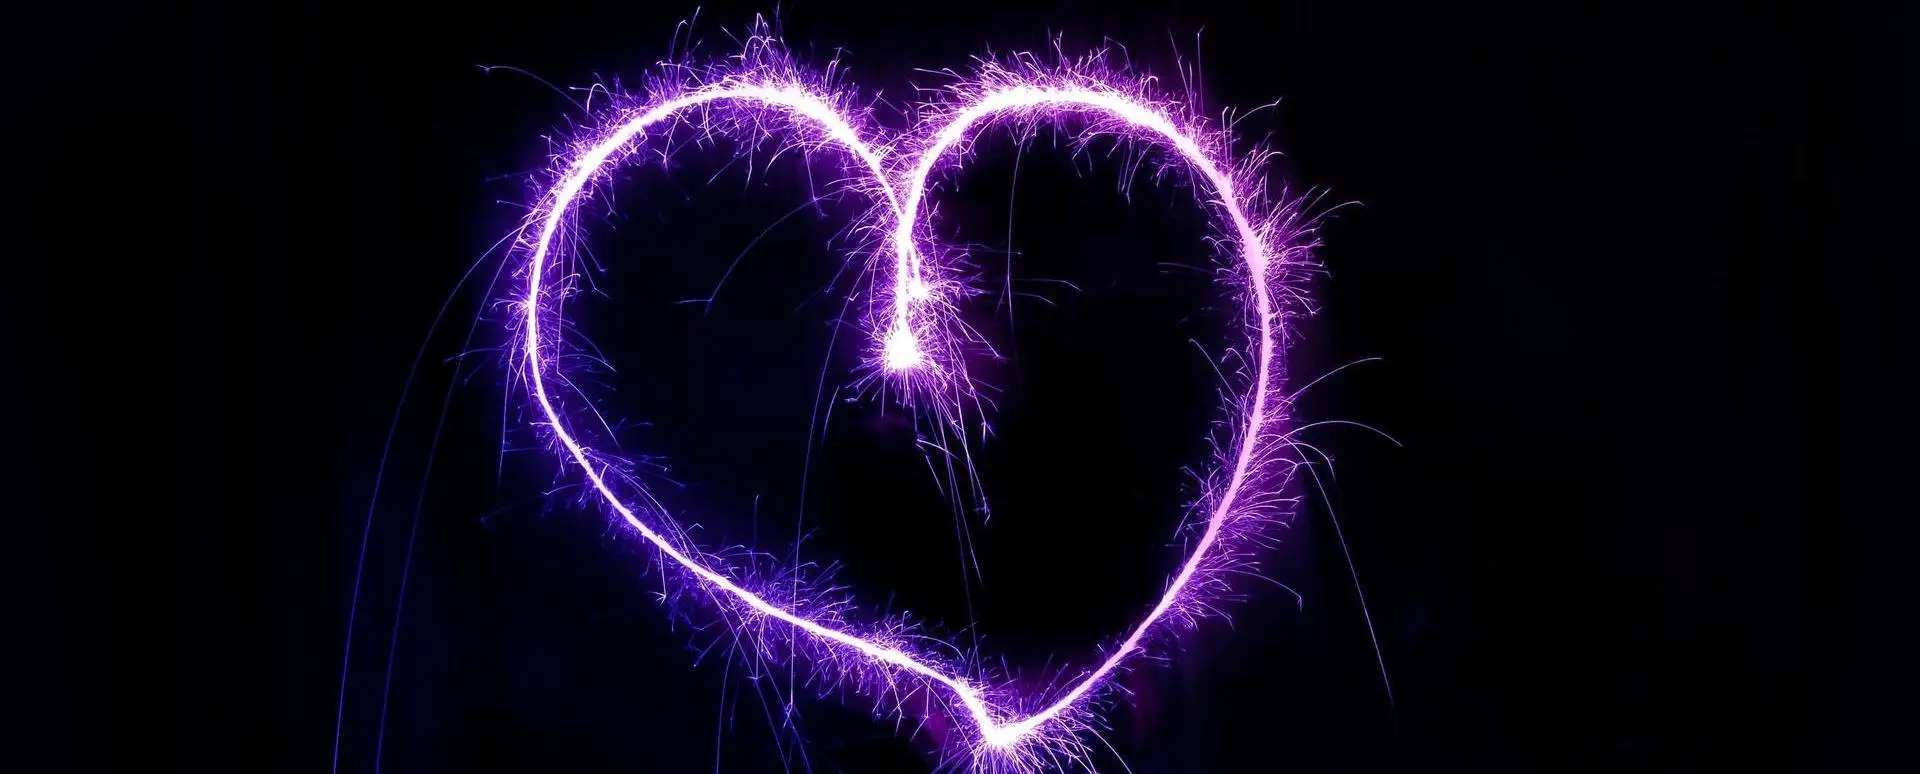 Send Romantic Love Messages Adobe Spark